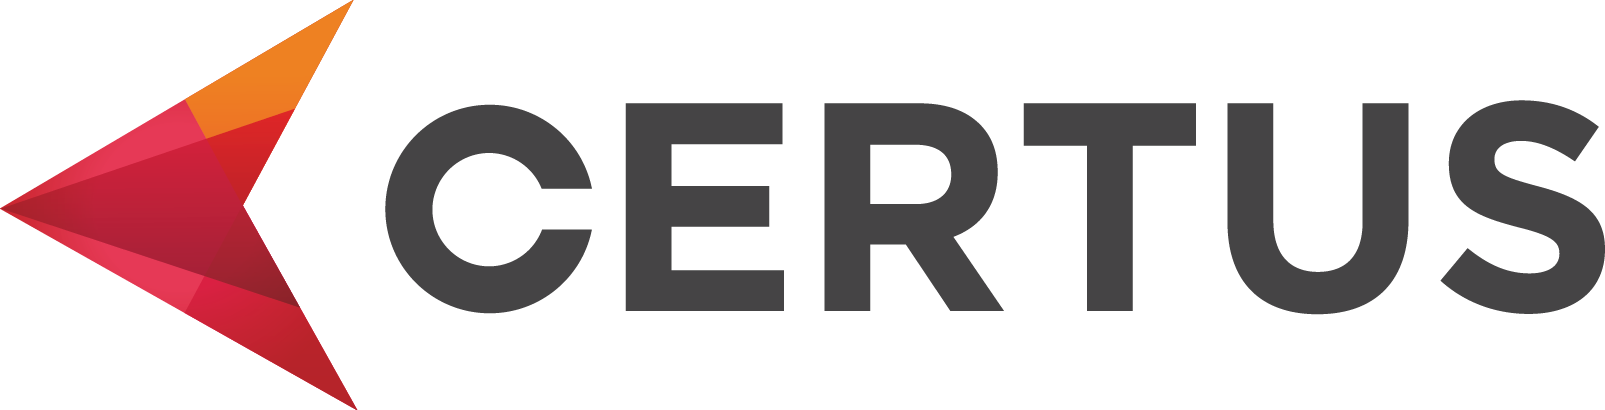 Certus Logo FINAL